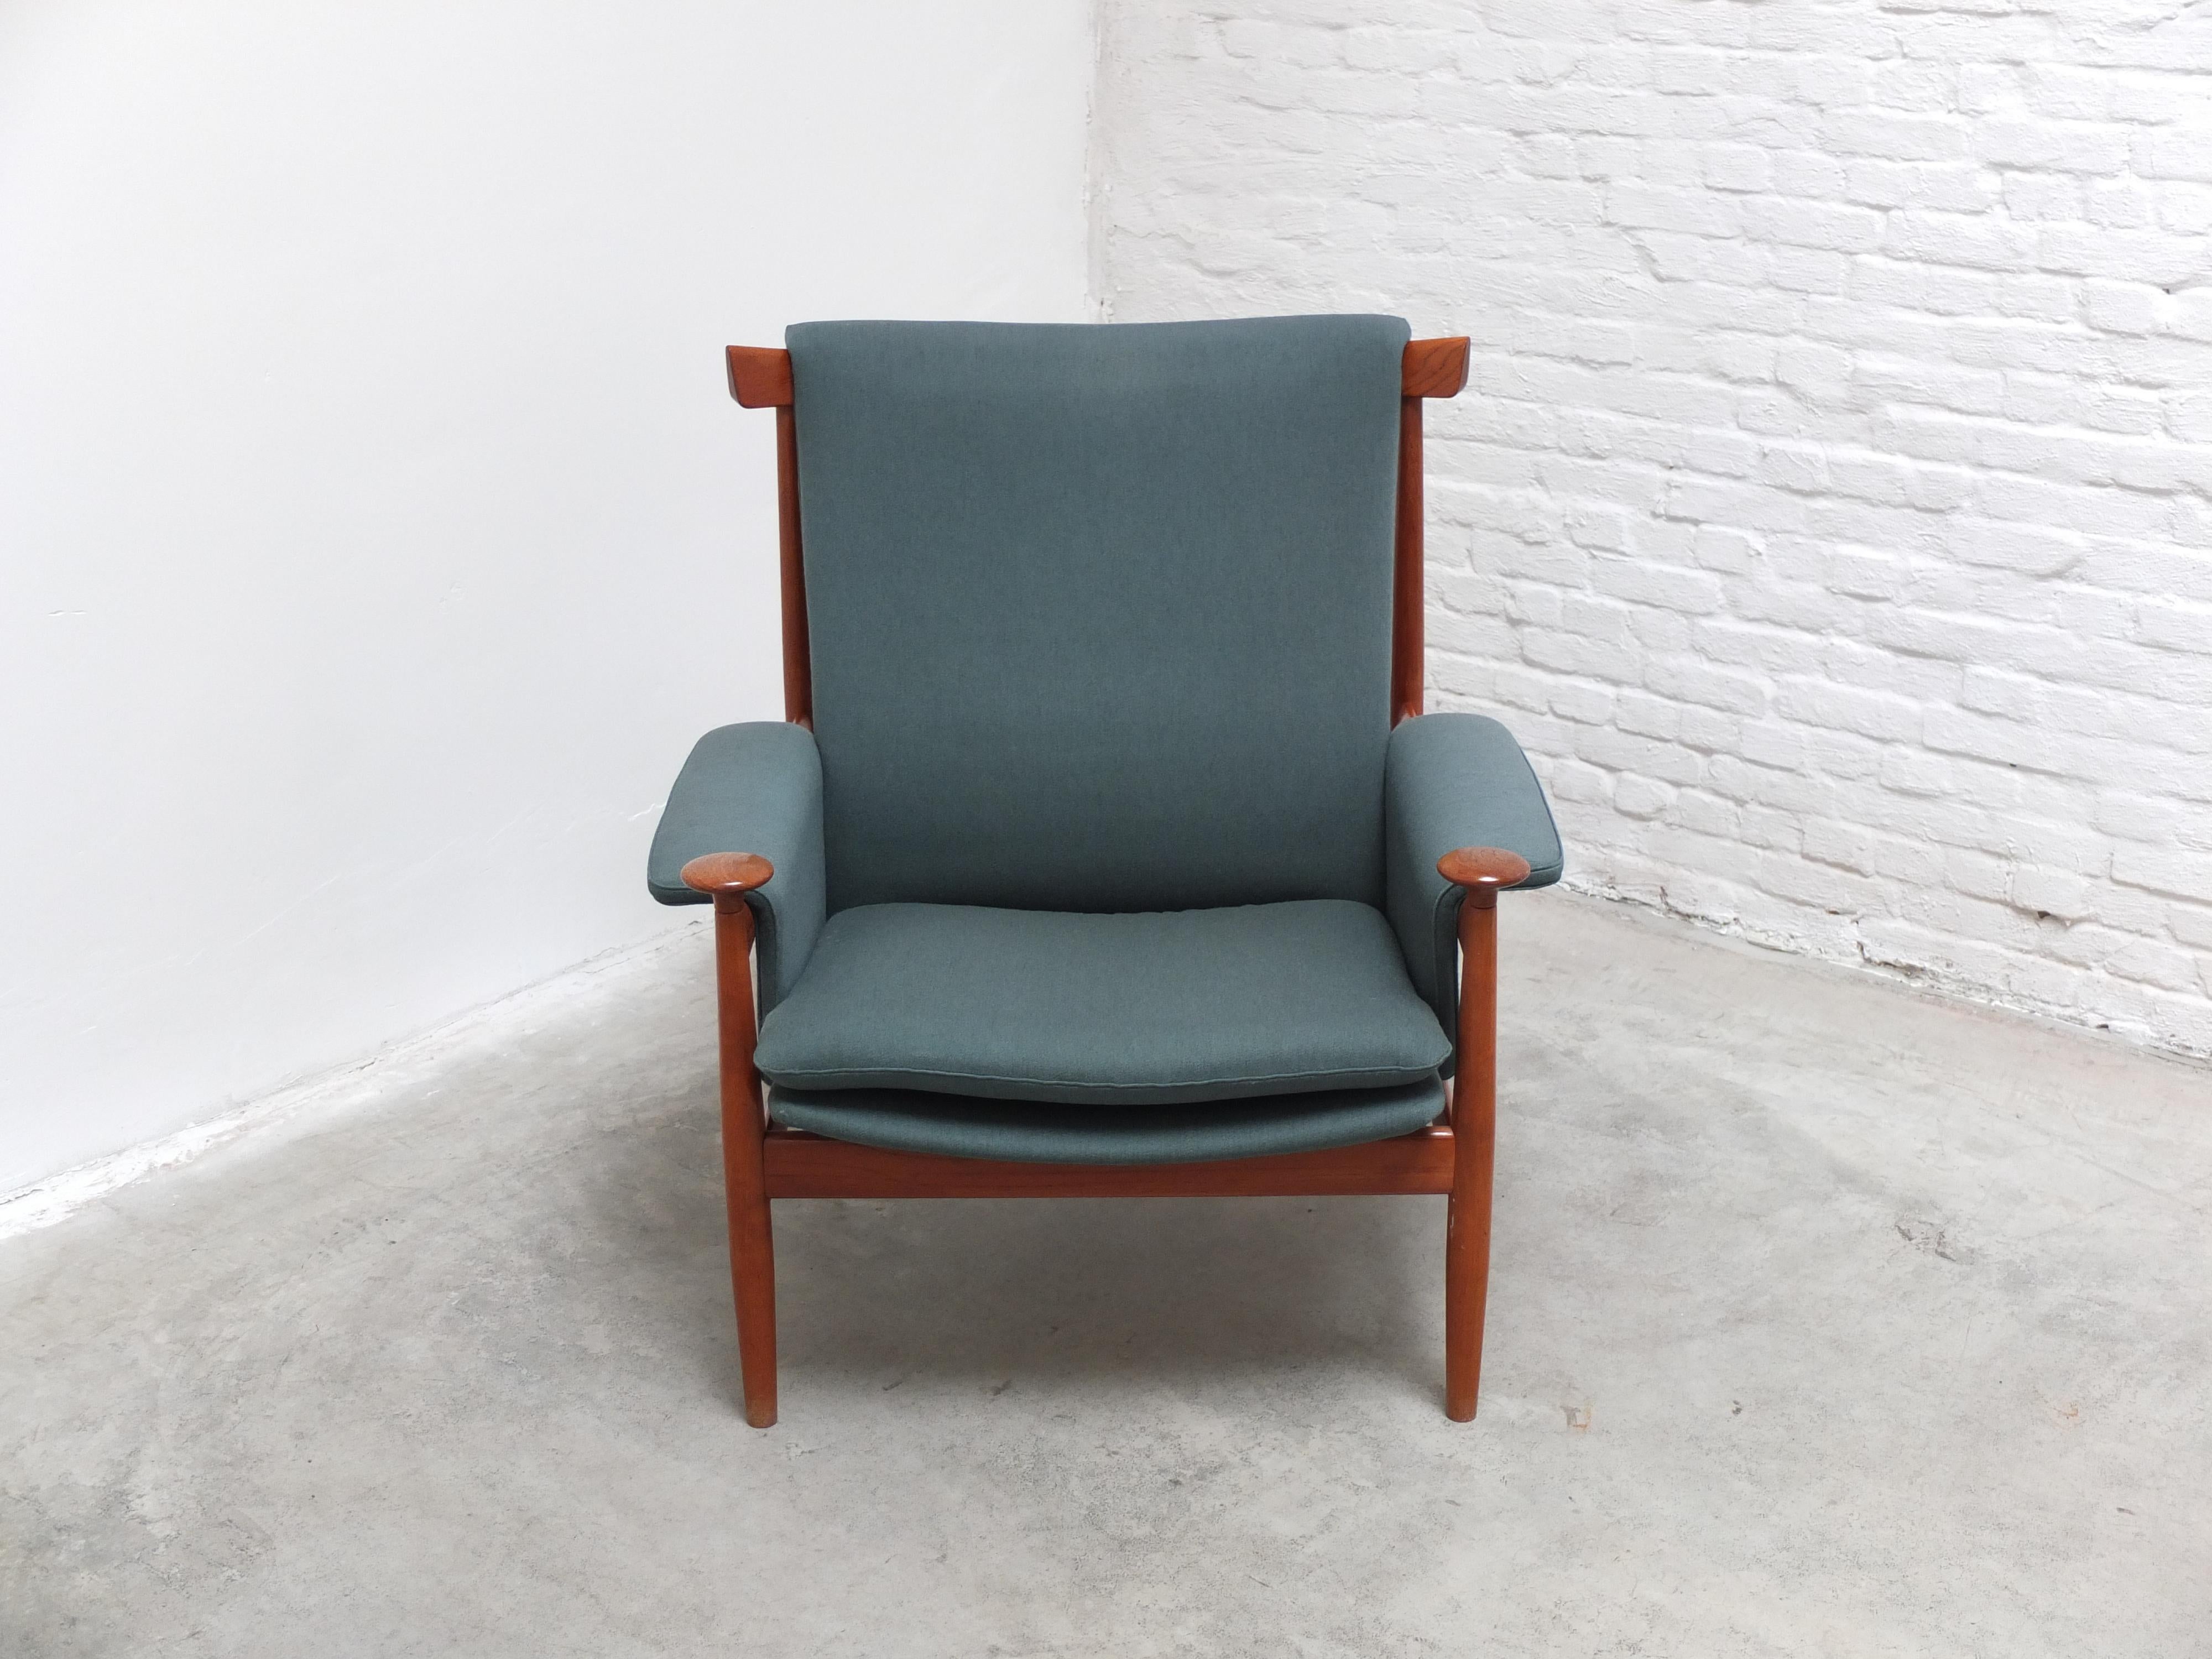 Scandinavian Modern Early 'Bwana' Lounge Chair by Finn Juhl for France & Son, 1962 For Sale